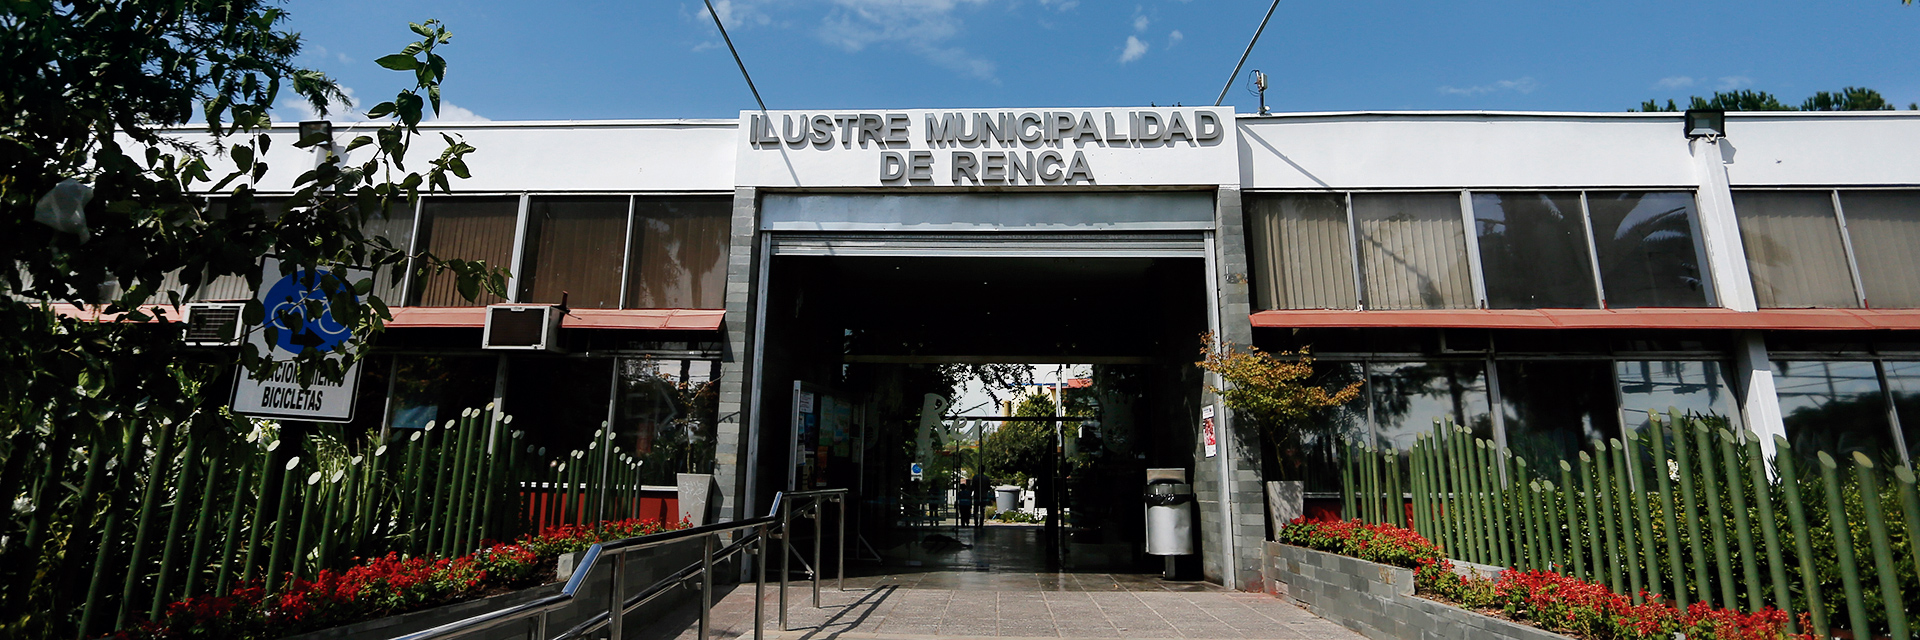 Tramites Ilustre Municipalidad De Renca